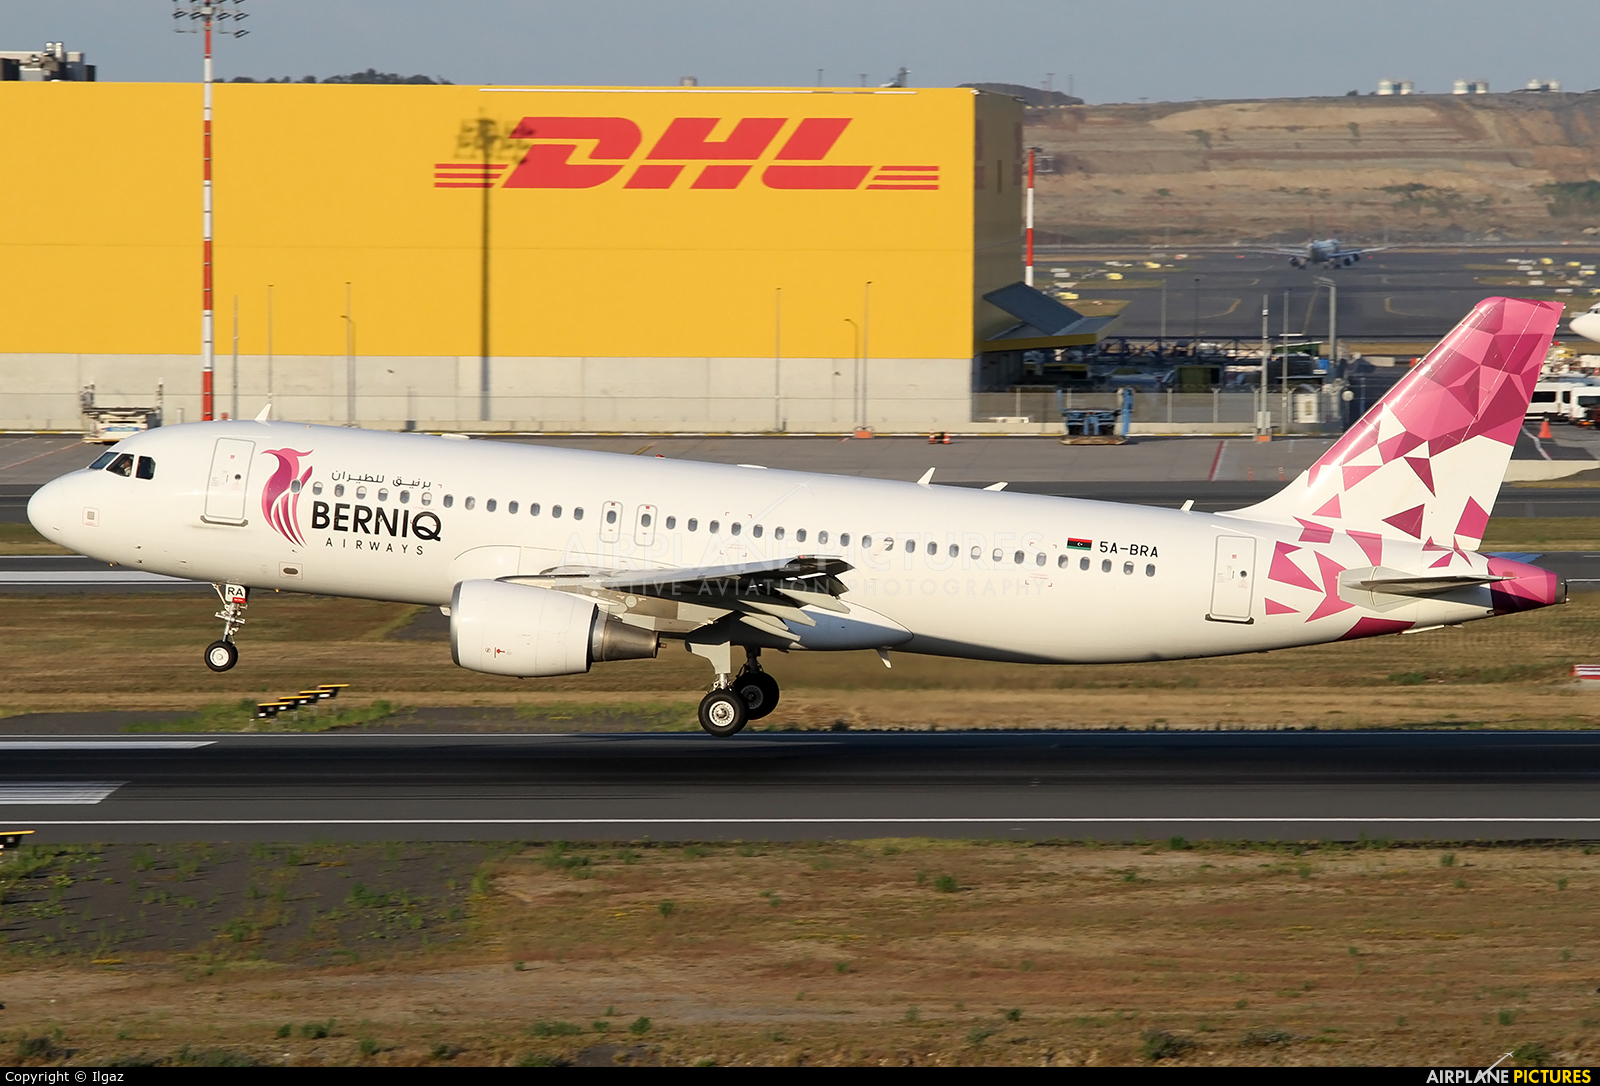 Berniq Airways 5A-BRA aircraft at İstanbul New Airport